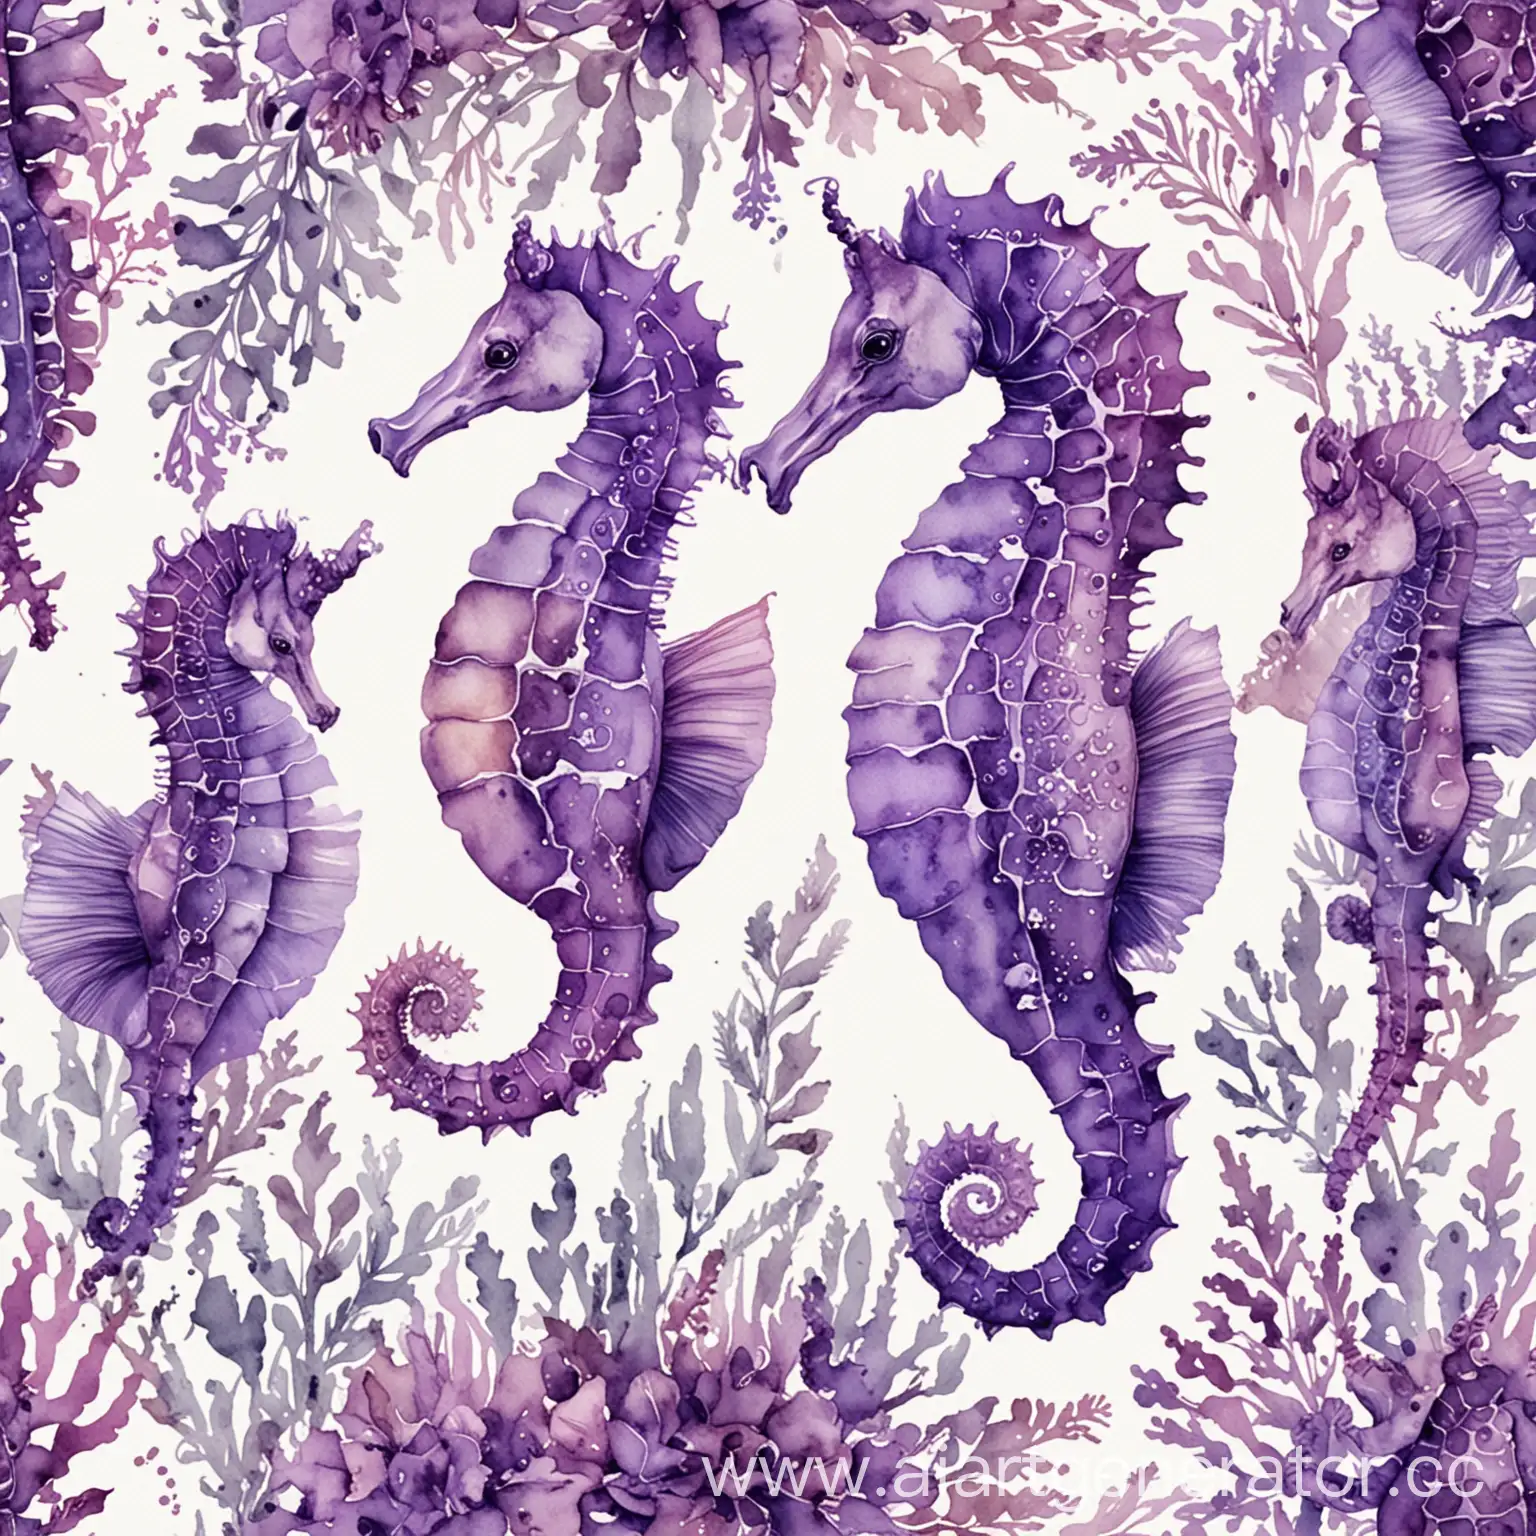 Purple-Shades-Watercolor-Monocomposition-of-Little-Seahorses